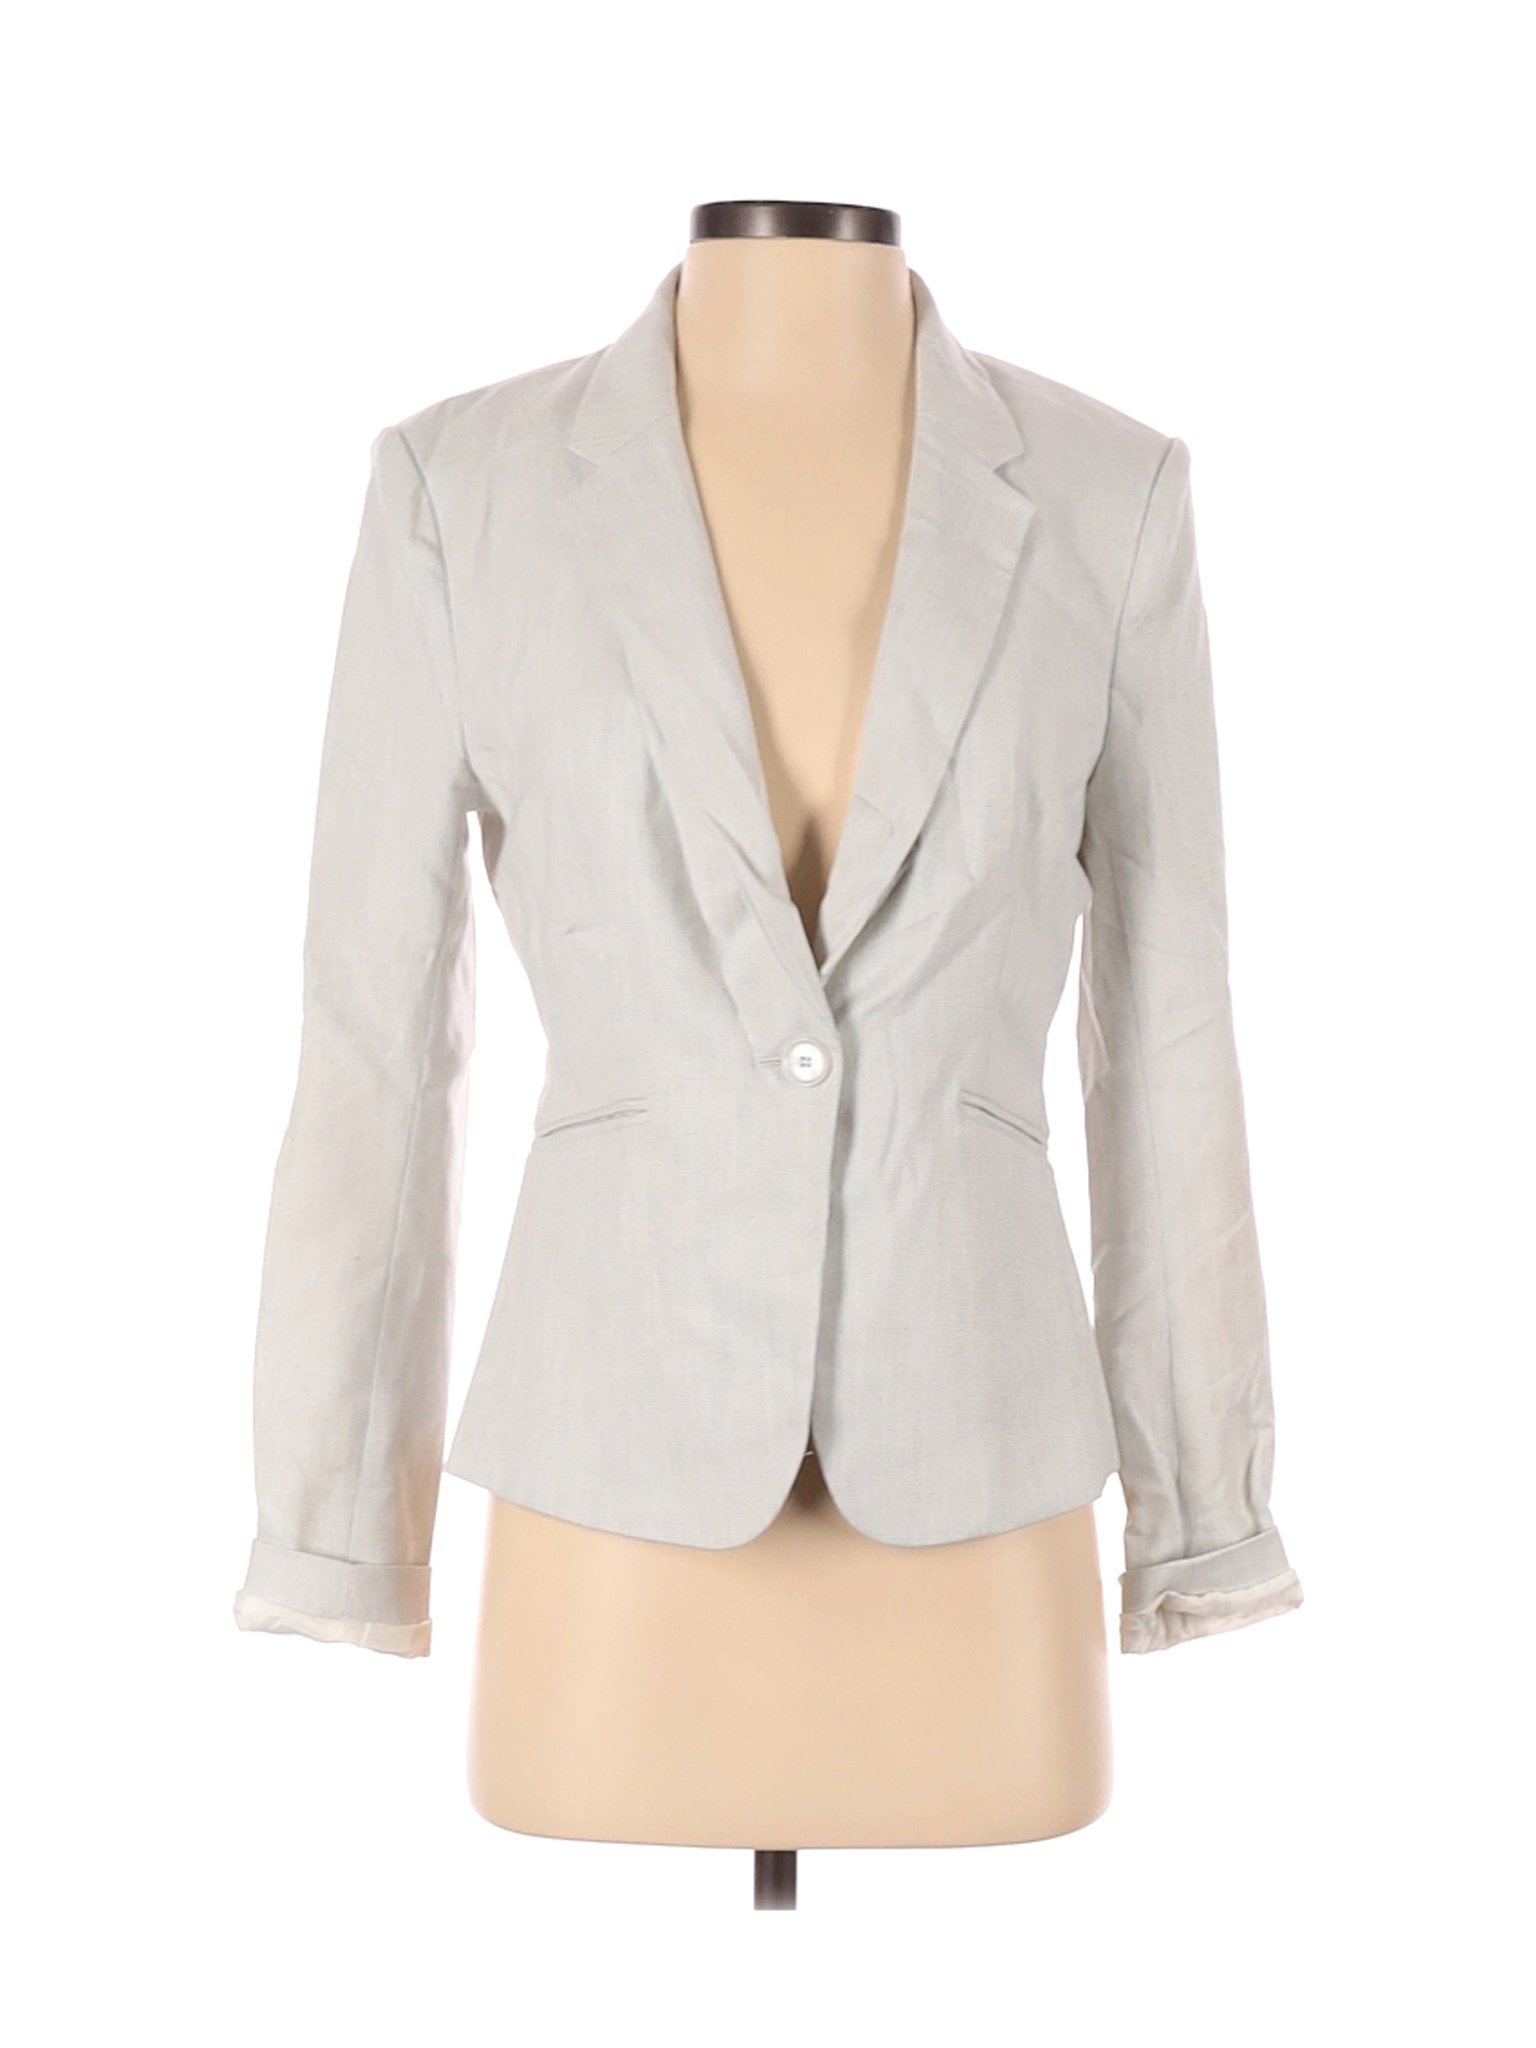 H&M Women Gray Blazer 6 | eBay